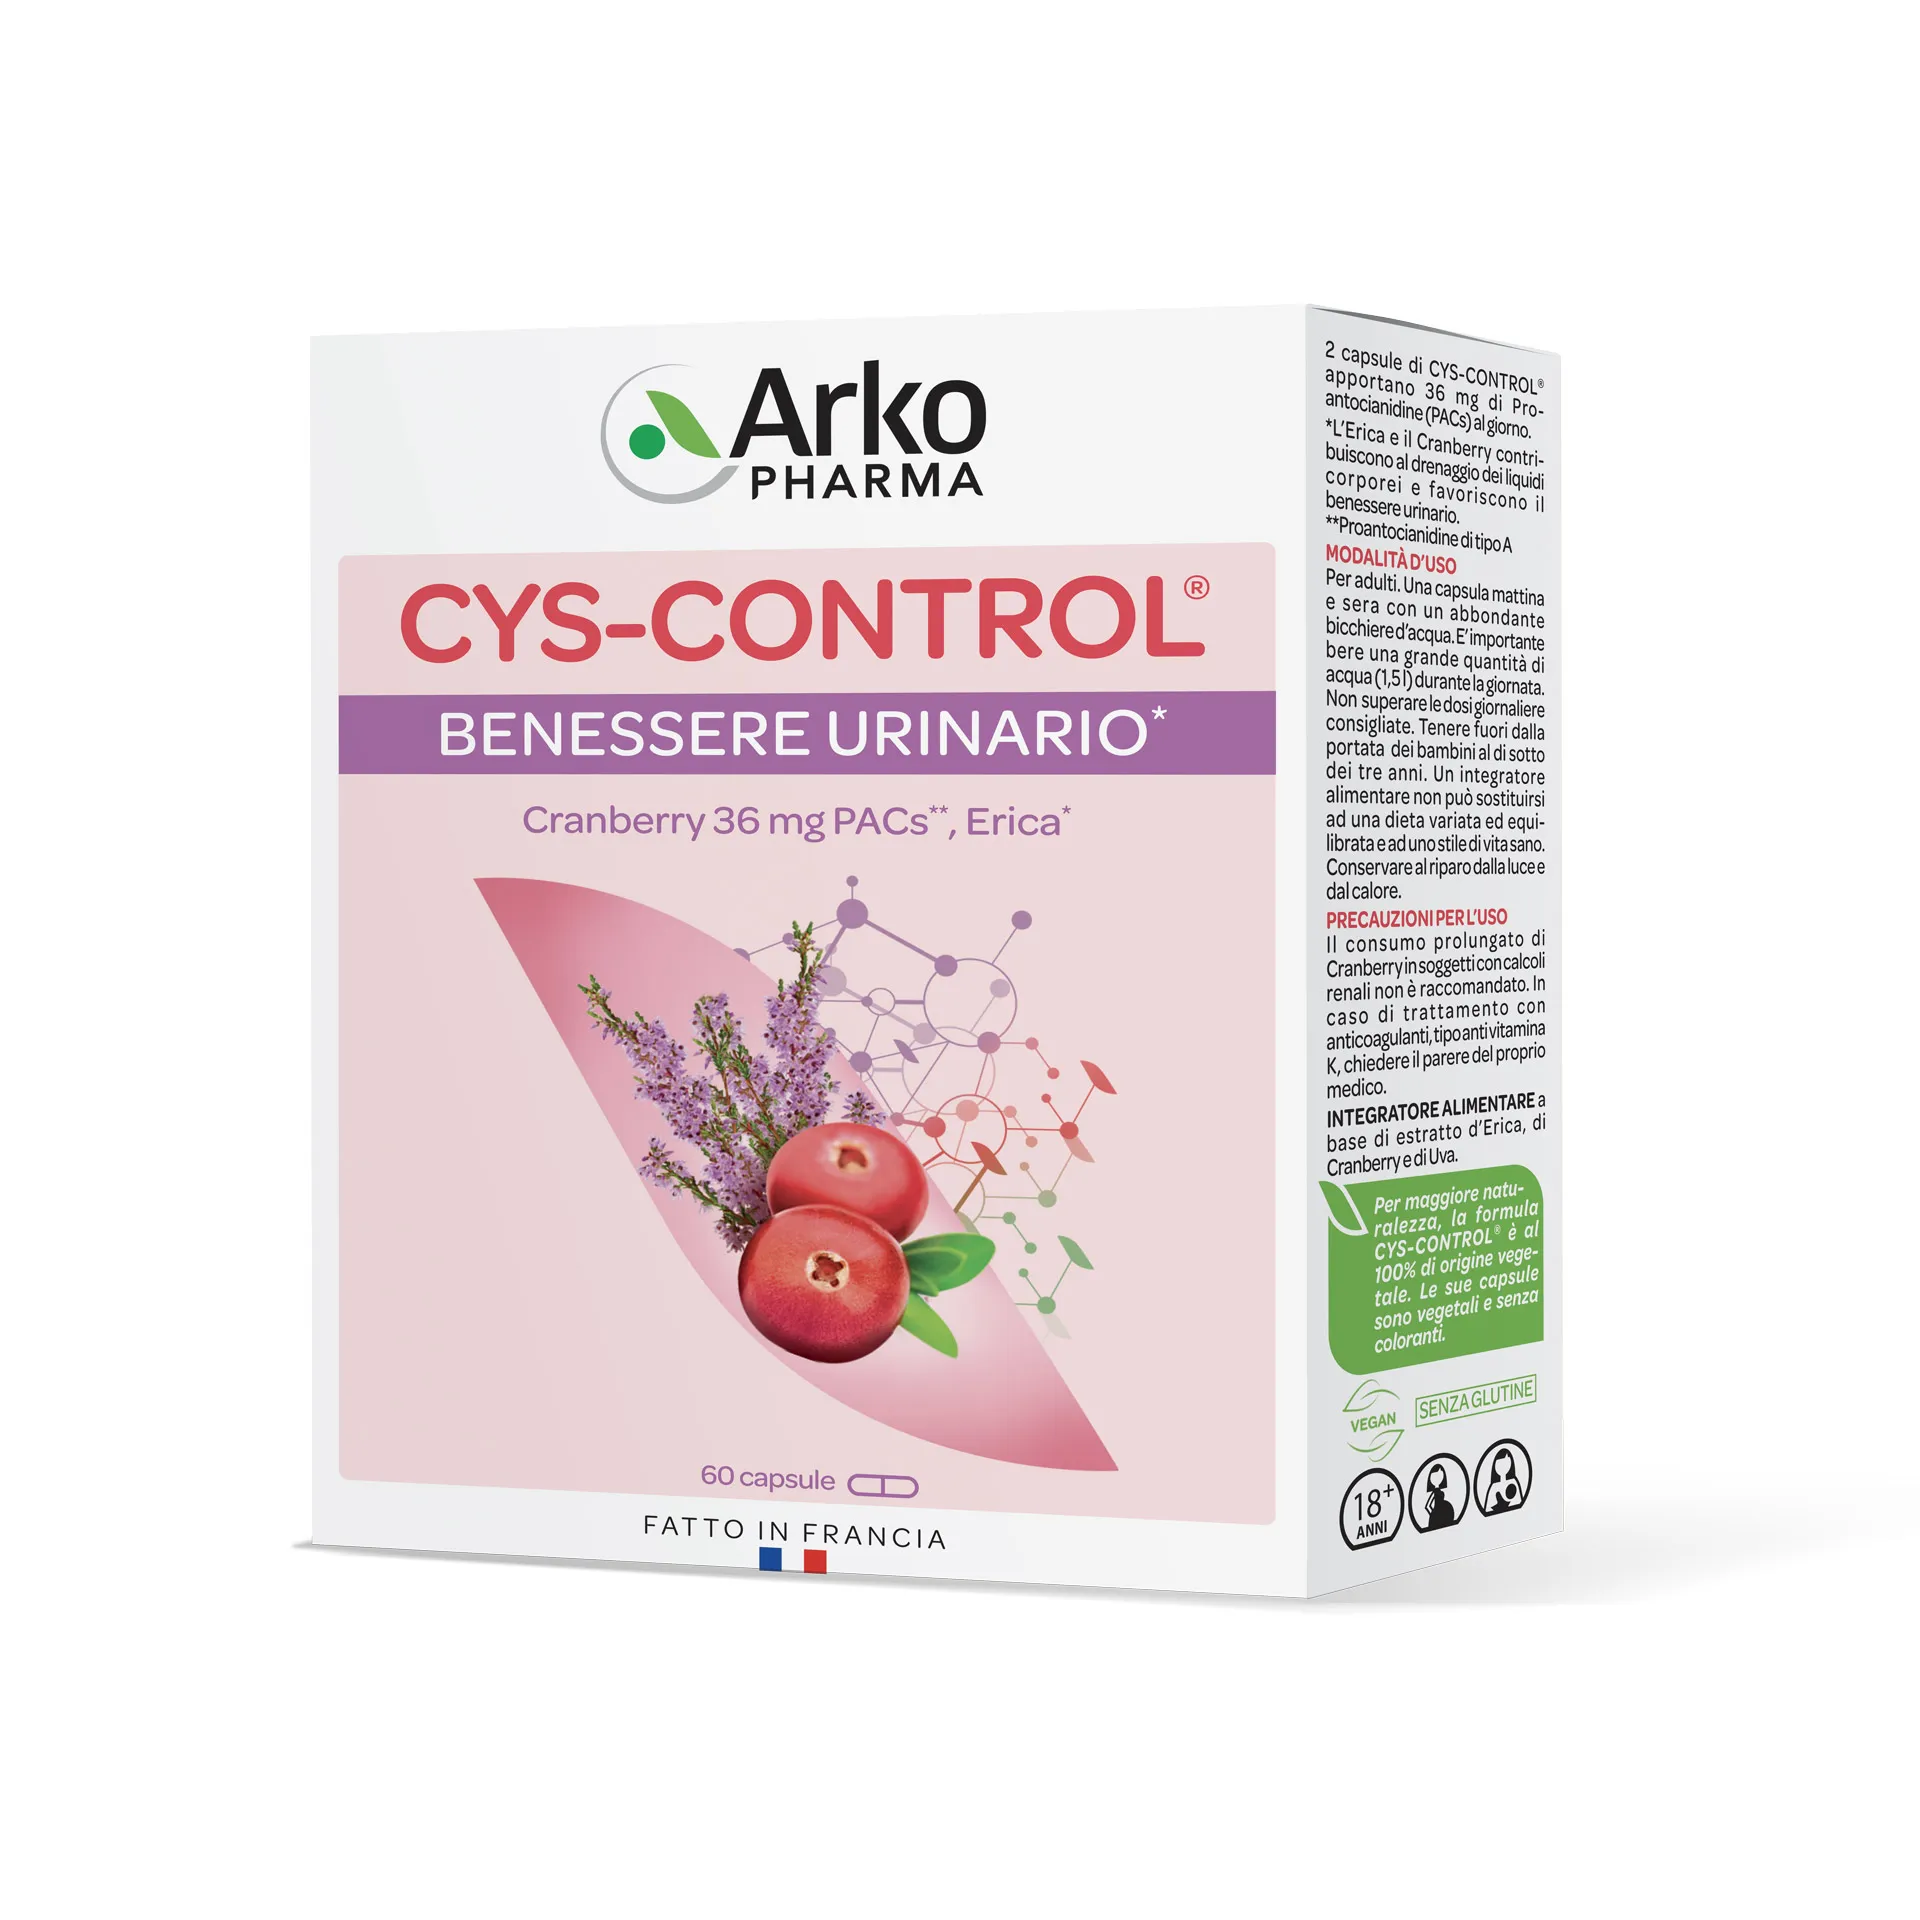 Arkopharma Cys-control Integratore Benessere Urinario 60 Capsule